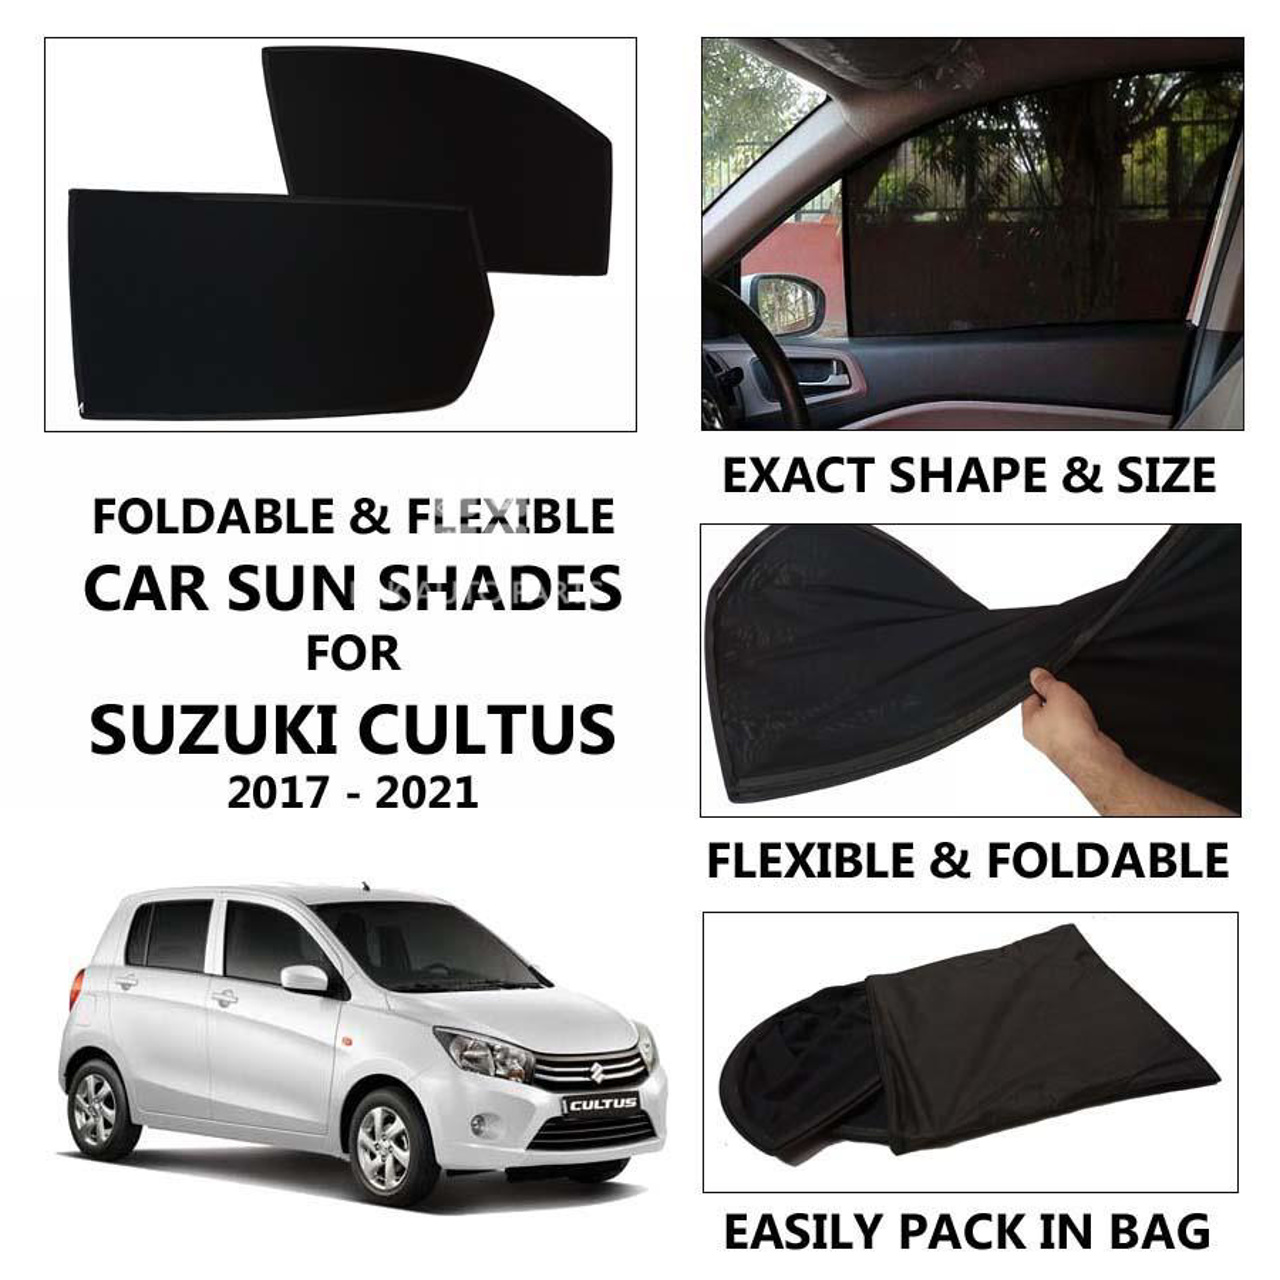 Picture of Foldable & Flexible Car Sunshades For Suzuki Cultus New Shape 2017 - 2021 - Dark Black - High Quality Jersy Cloth